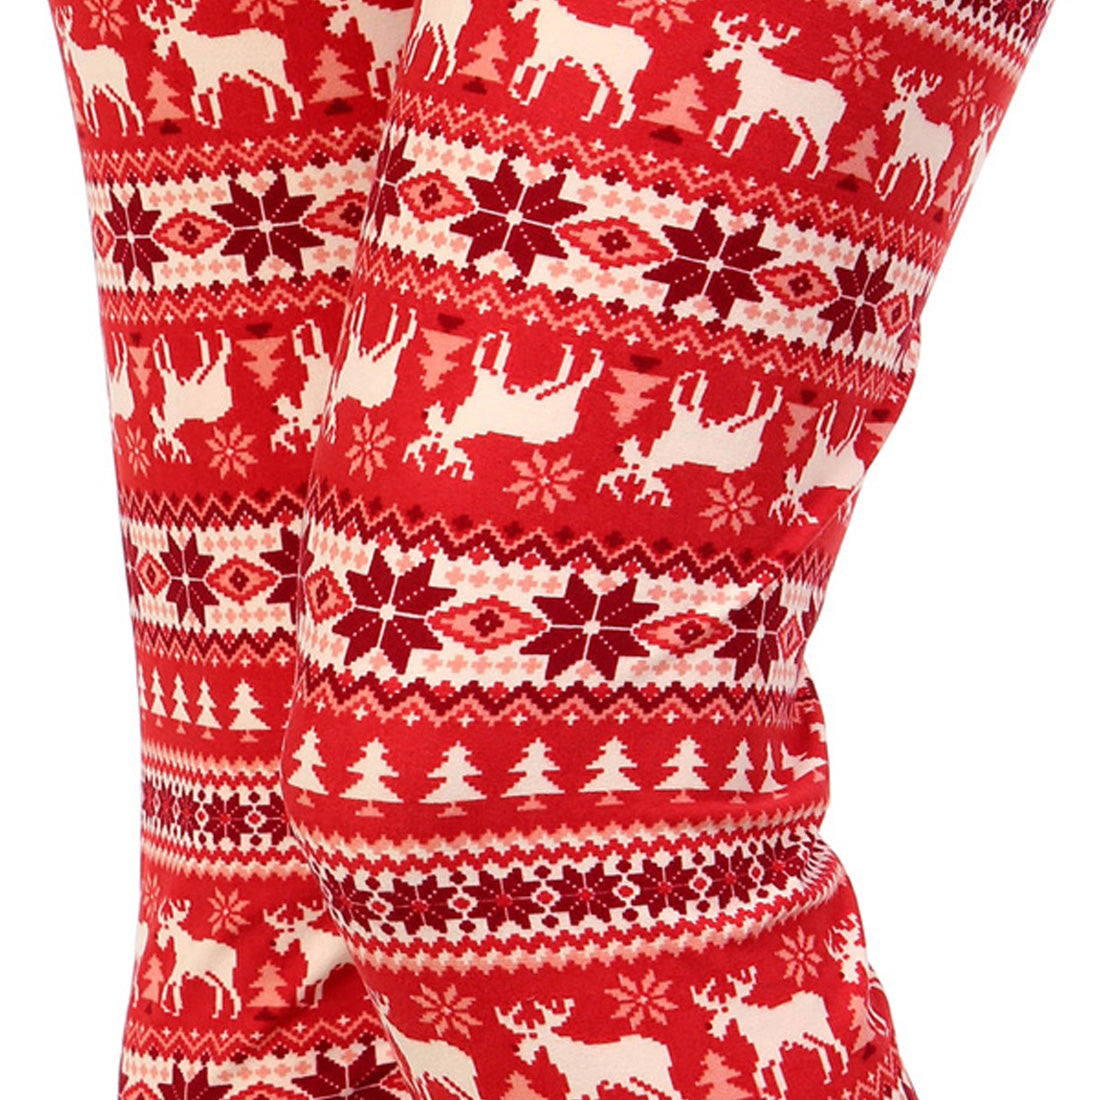 Reindeer Rally Christmas Leggings – Leg Smart